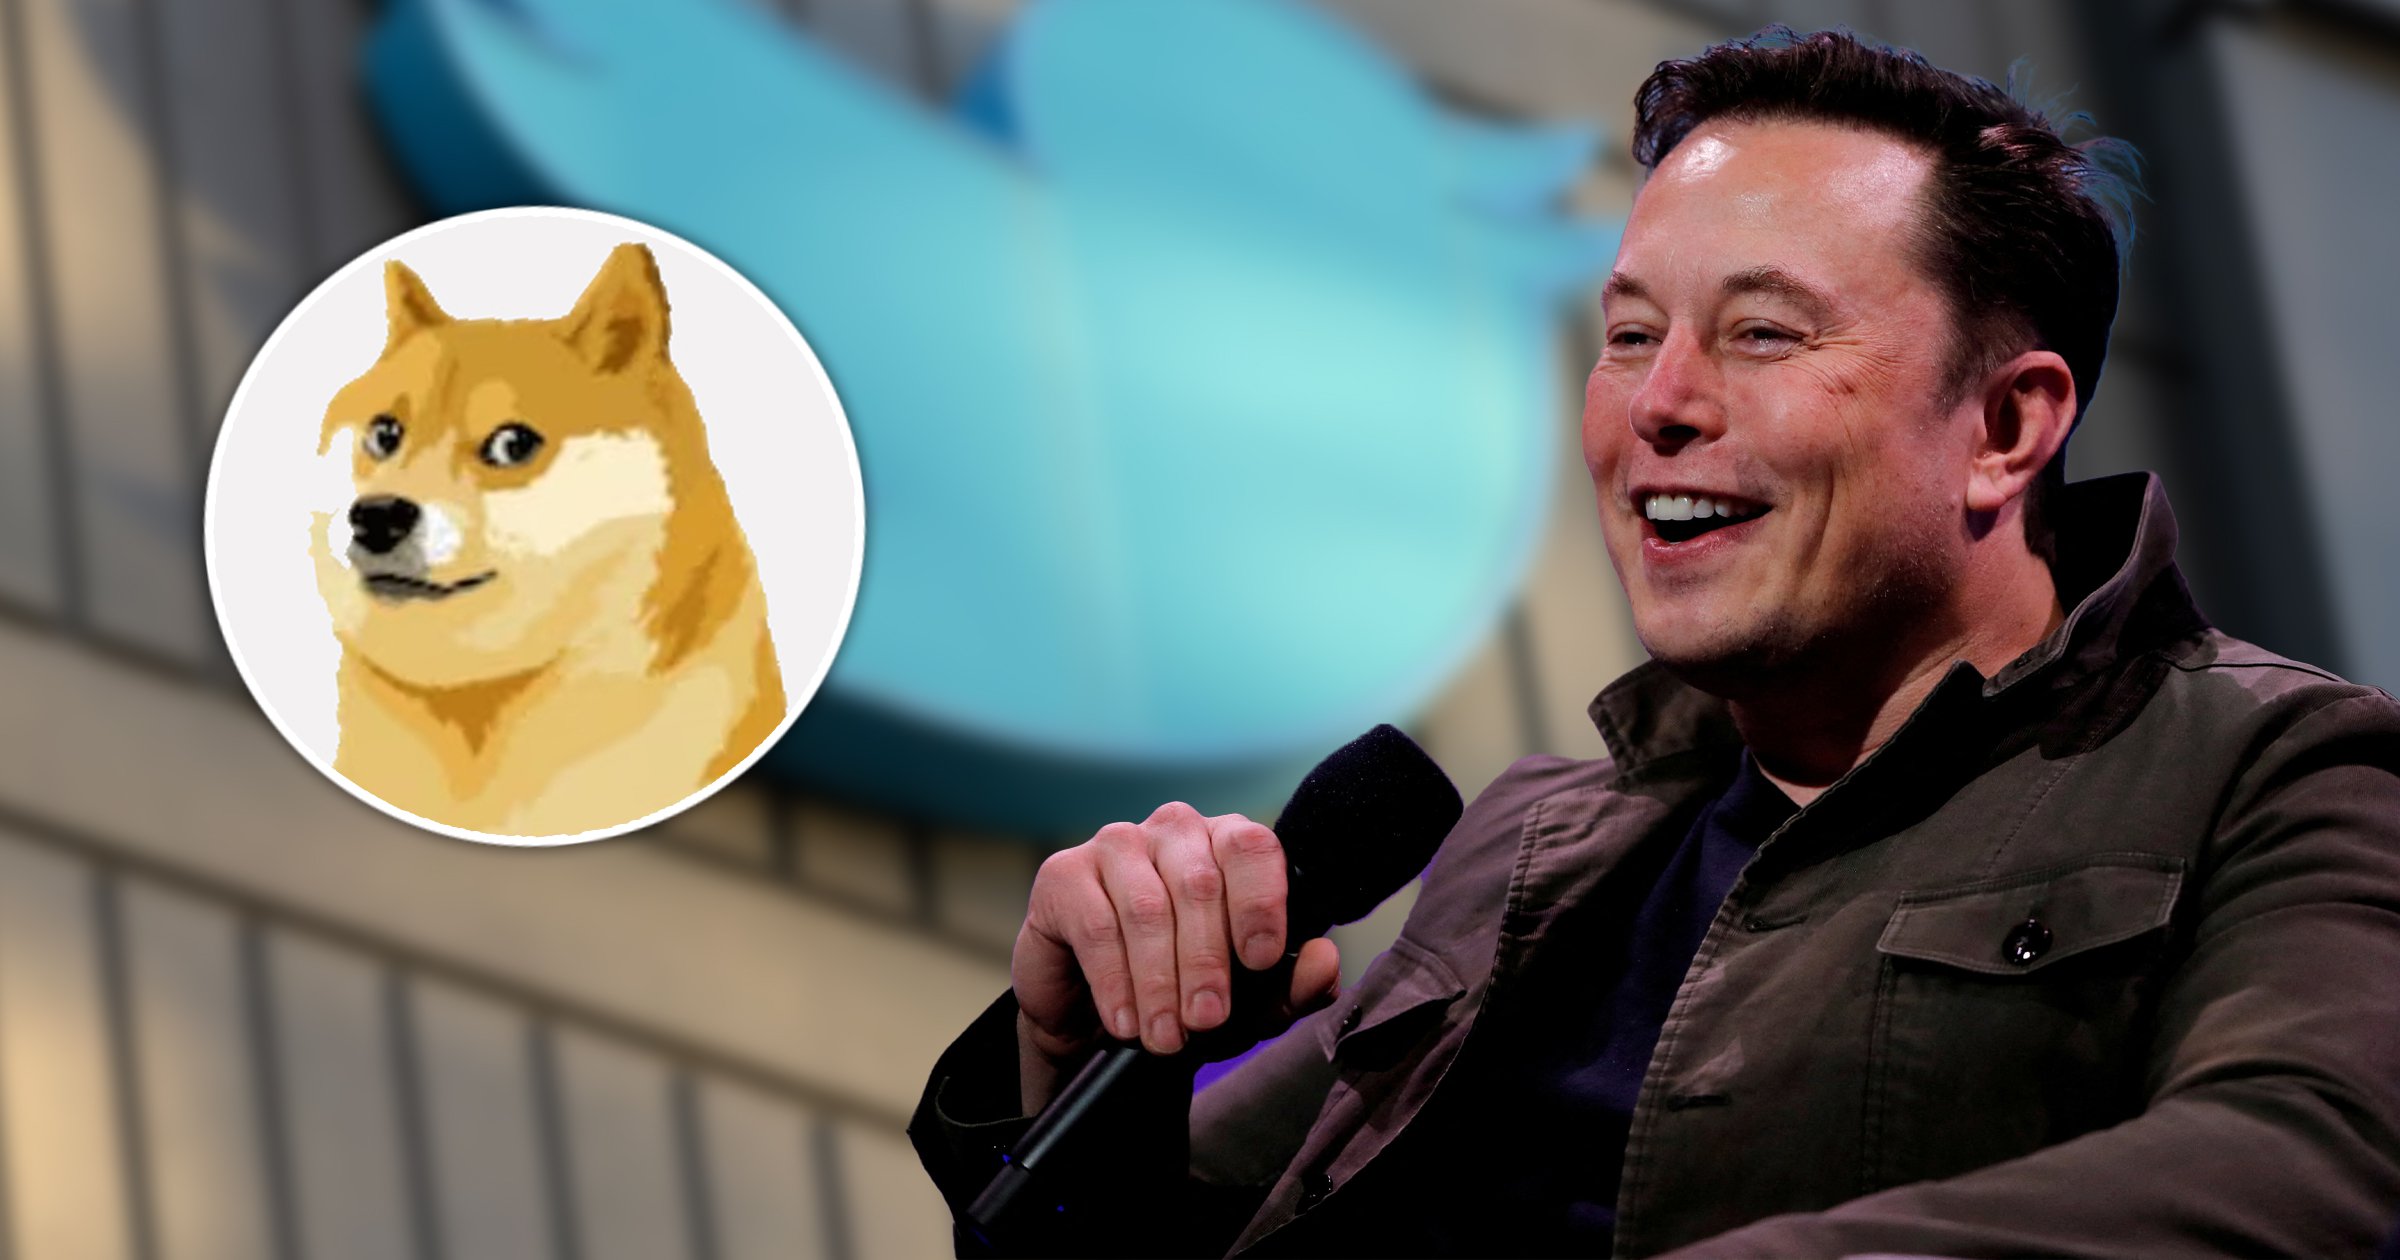 Elon Musk changes Twitter’s logo to viral Doge meme